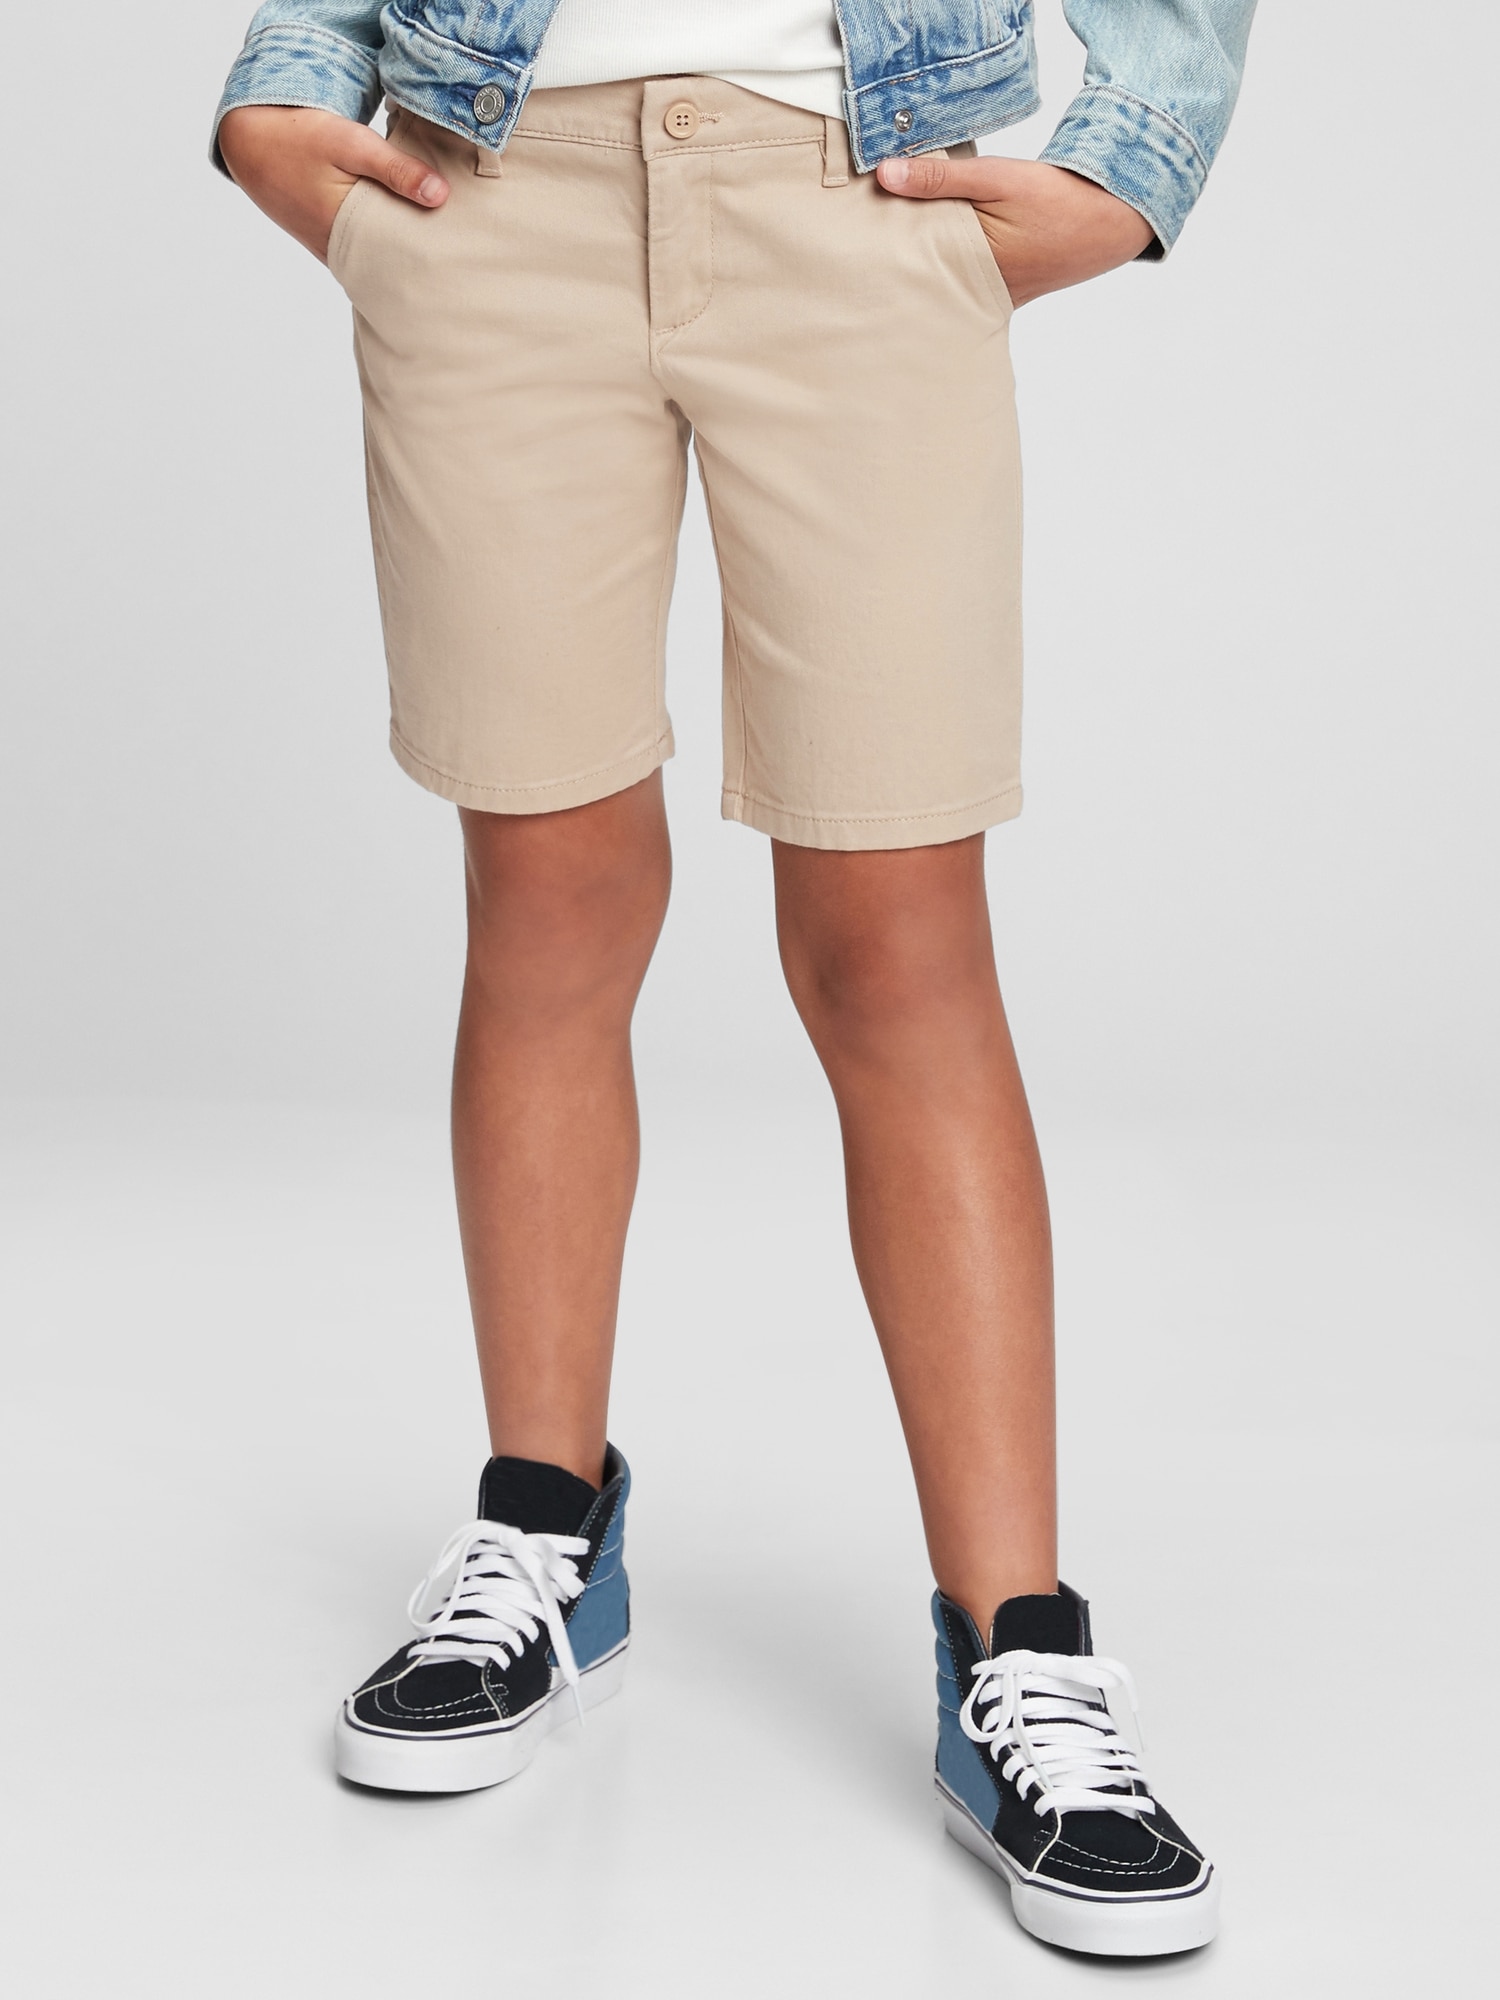 Gap Kids Uniform Bermuda Shorts